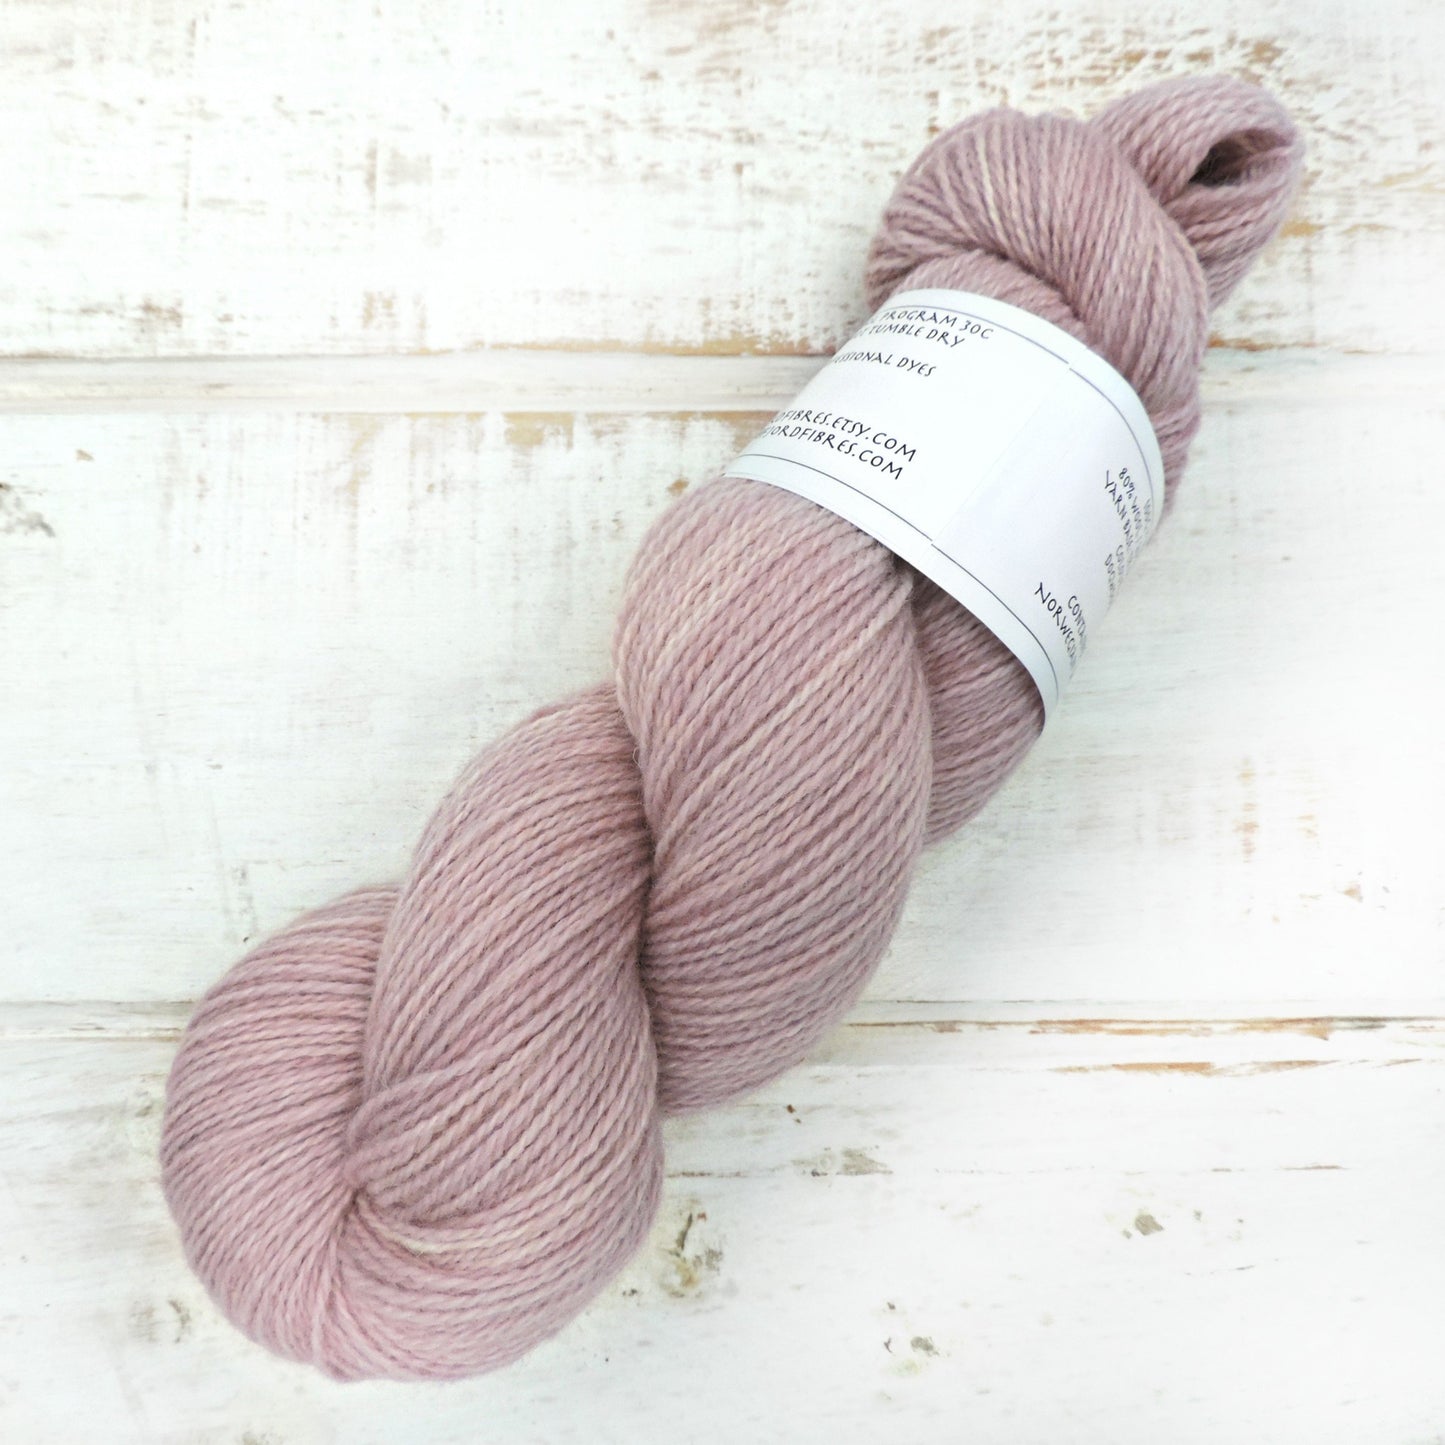 Dogwood Rose - Trollfjord sock - Hand Dyed Yarn - Tonal Yarn